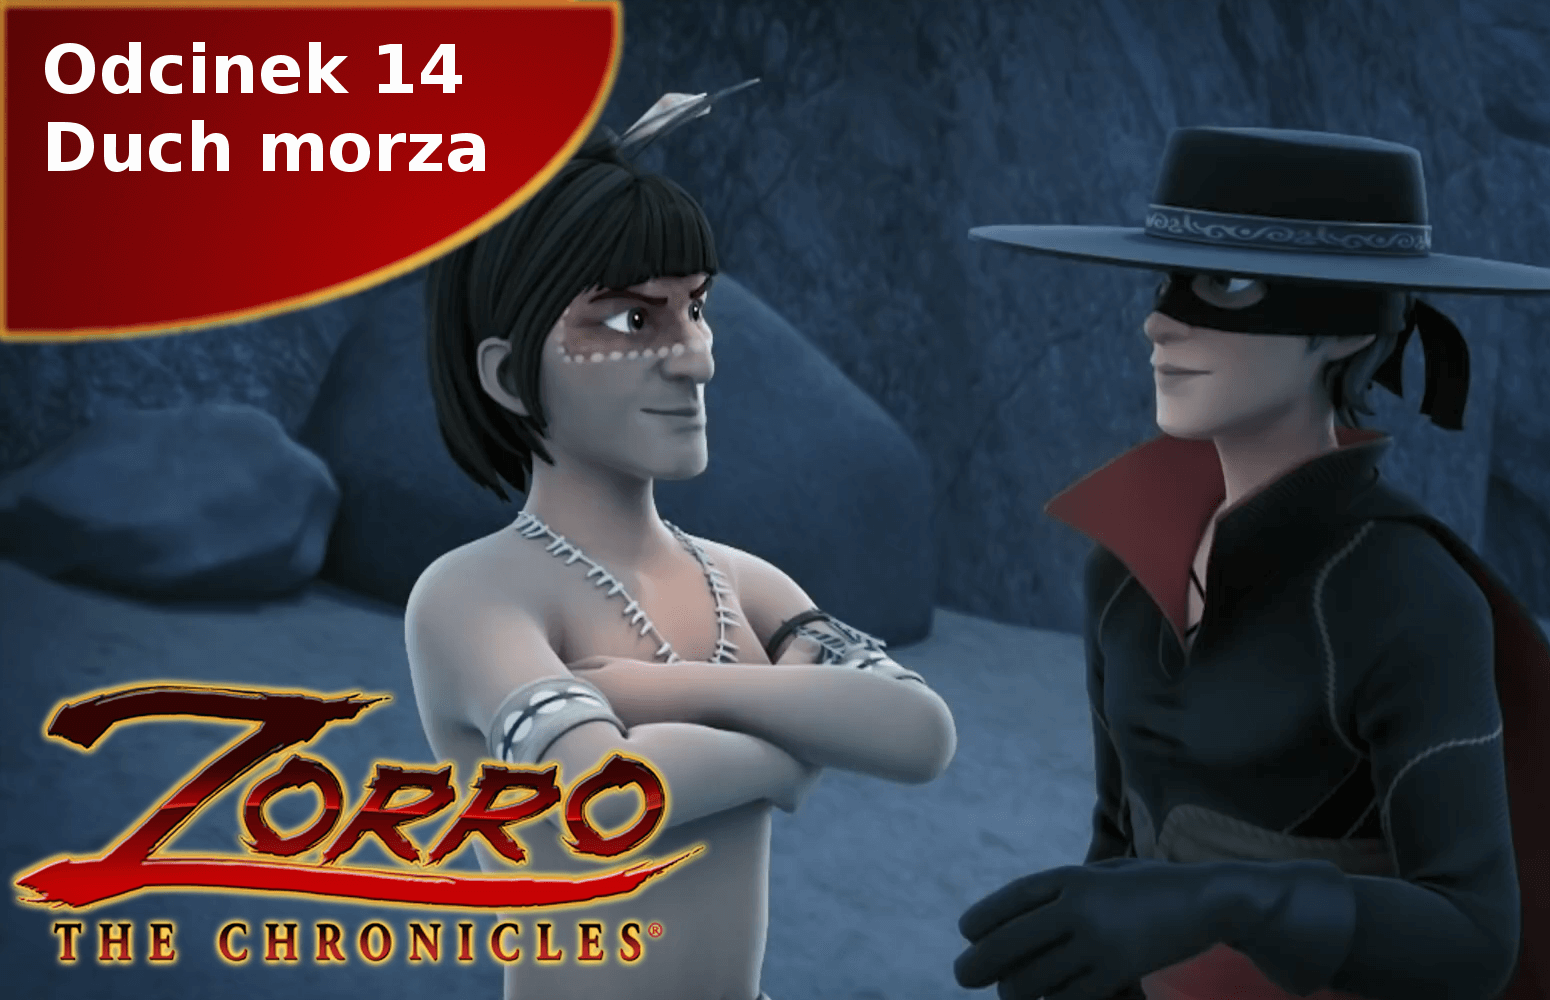 Kroniki Zorro odcinek 14 Duch morza